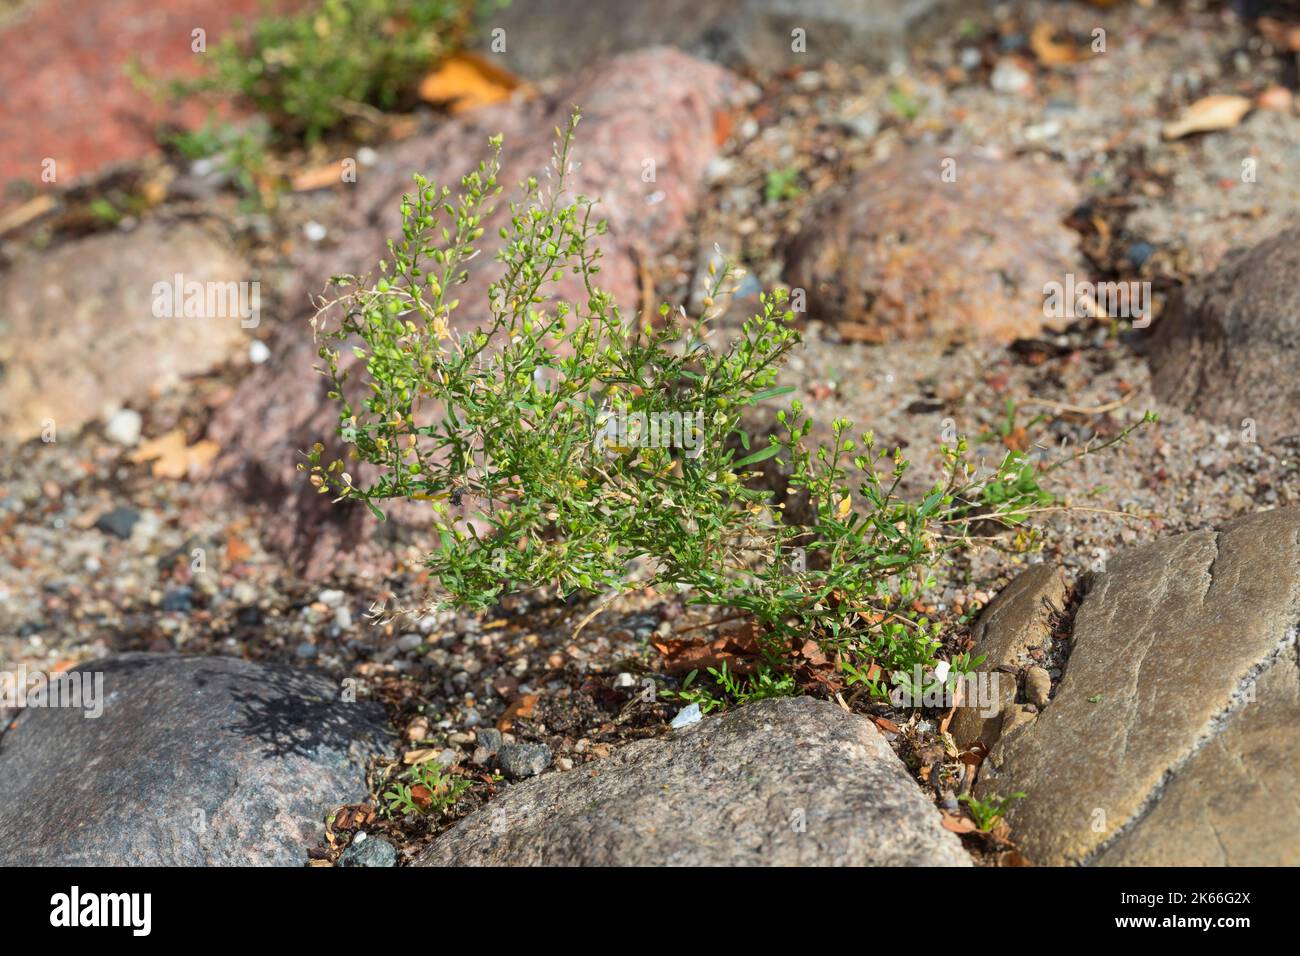 narrowleaf pepperweed, narrow-leaved pepperwort, peppergrass (Lepidium ruderale), grows in paving gaps, Germany Stock Photo